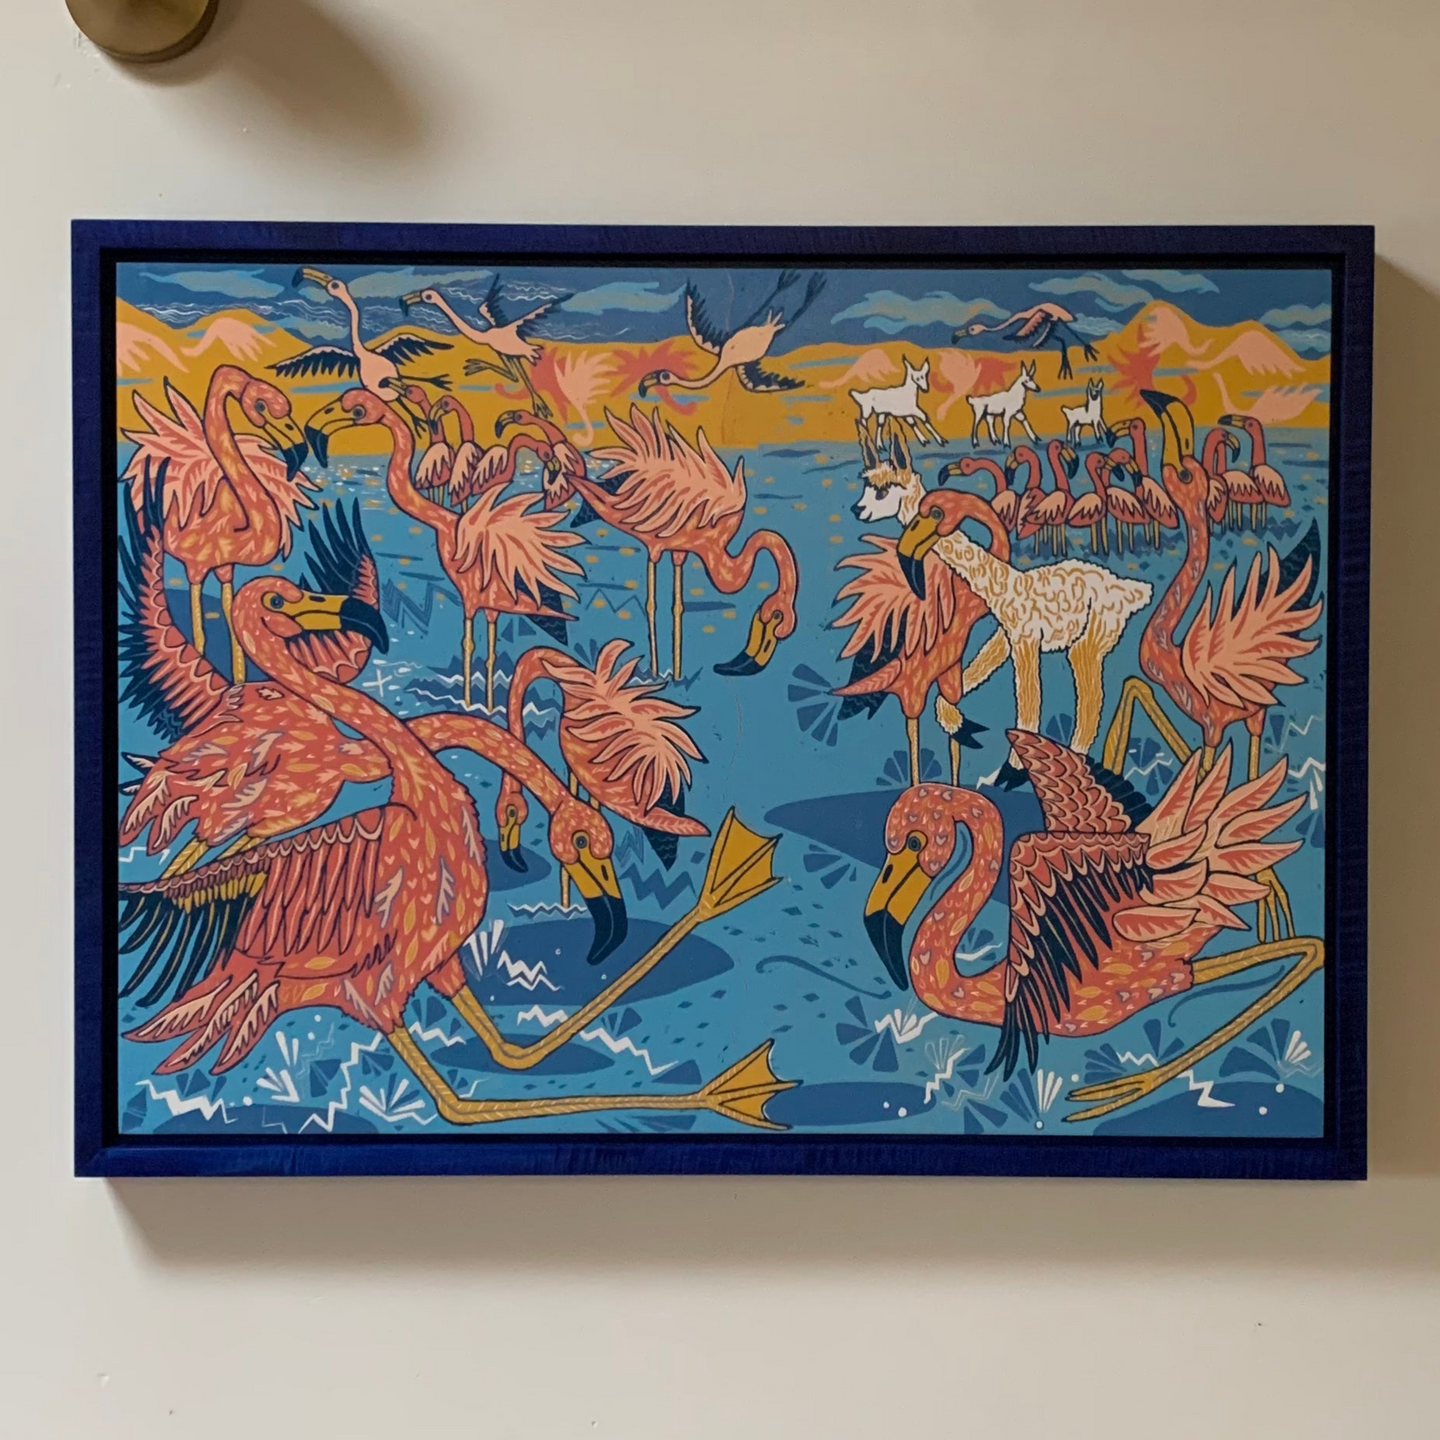 Flamingo and llama woodcut framed in blue